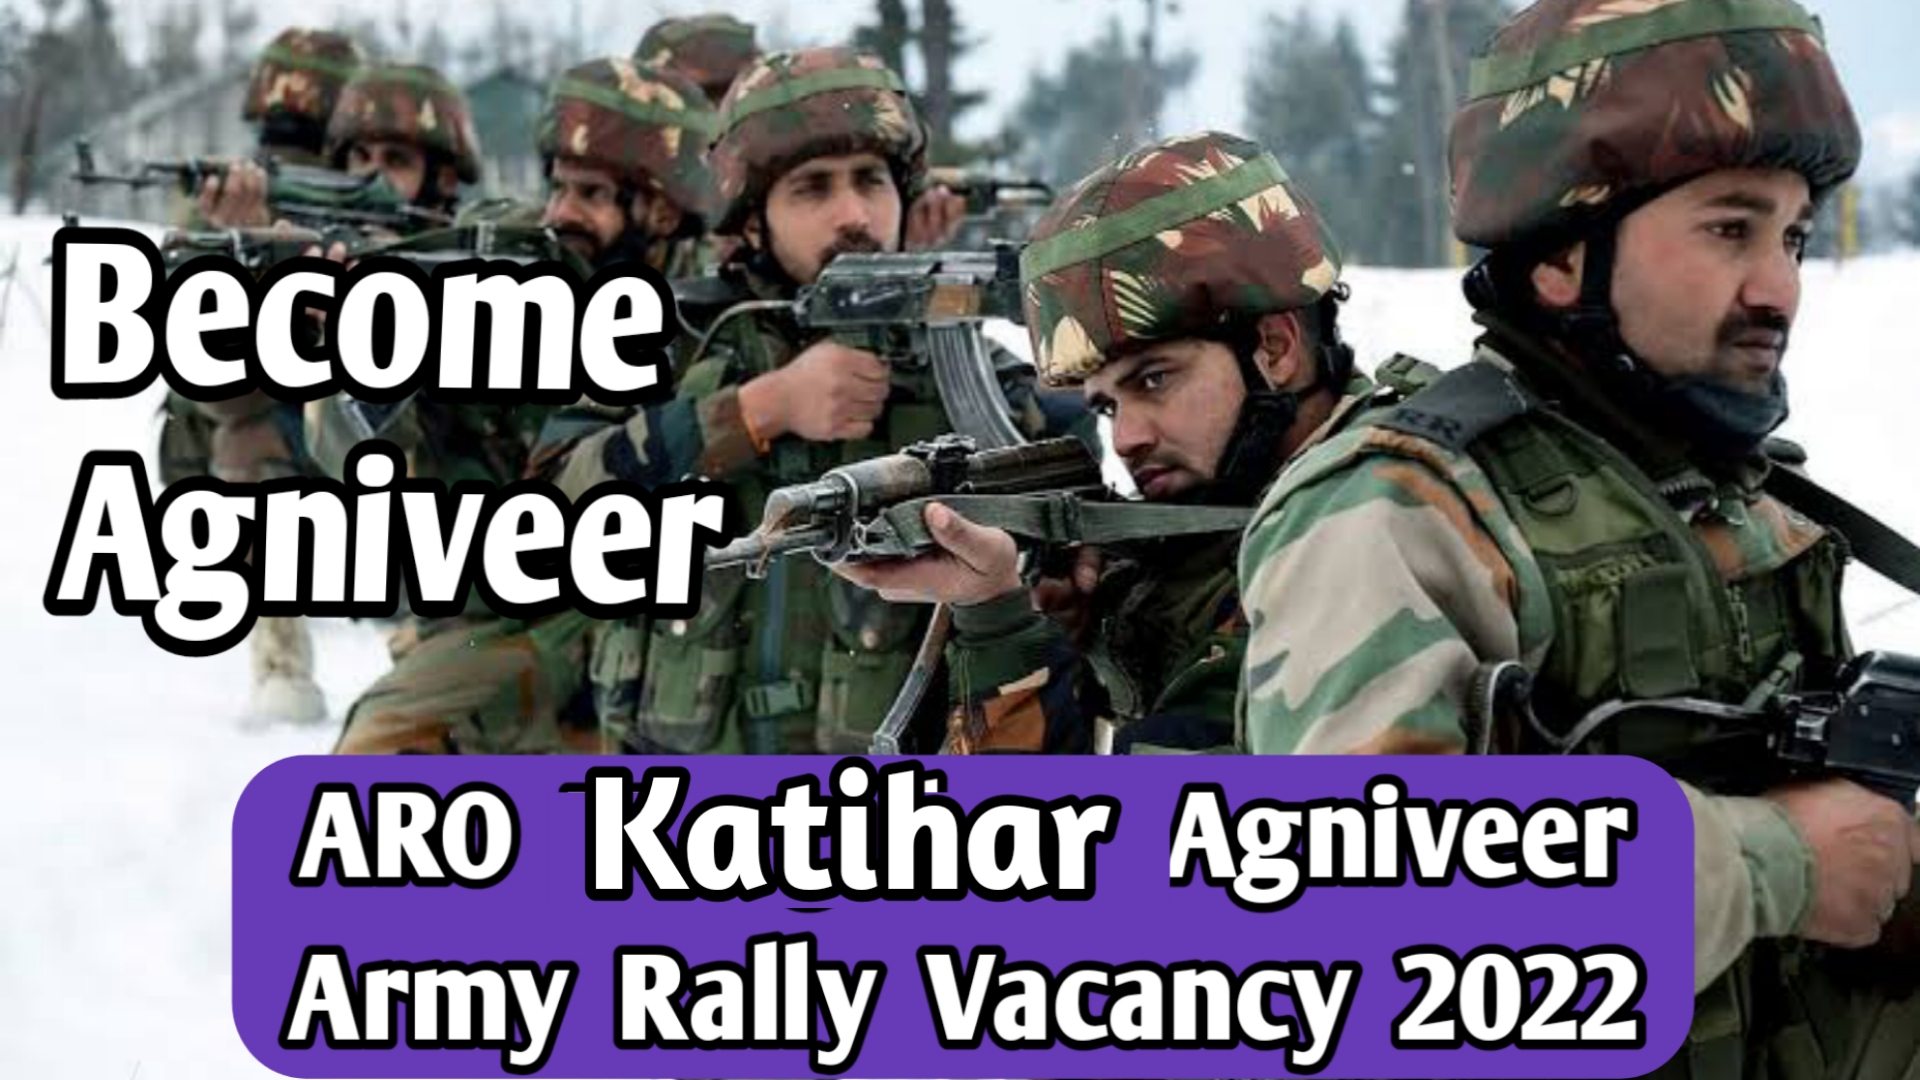 ARO Katihar Agniveer Army Rally Vacancy 2022